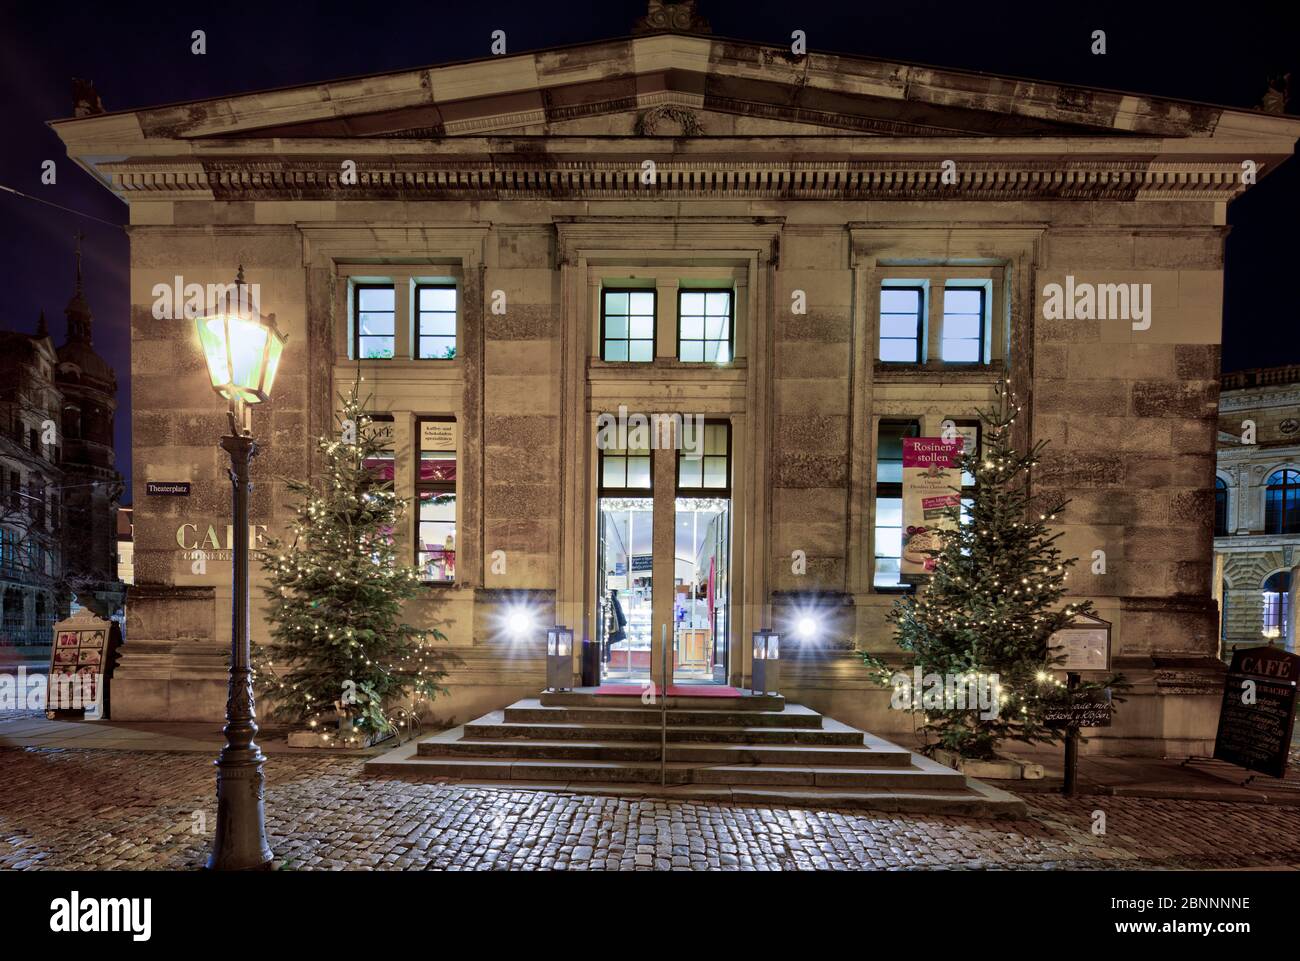 Cafe Schinkelwache, Theaterplatz, facade, illuminated, Dresden, Saxony, Germany, Europe, Stock Photo